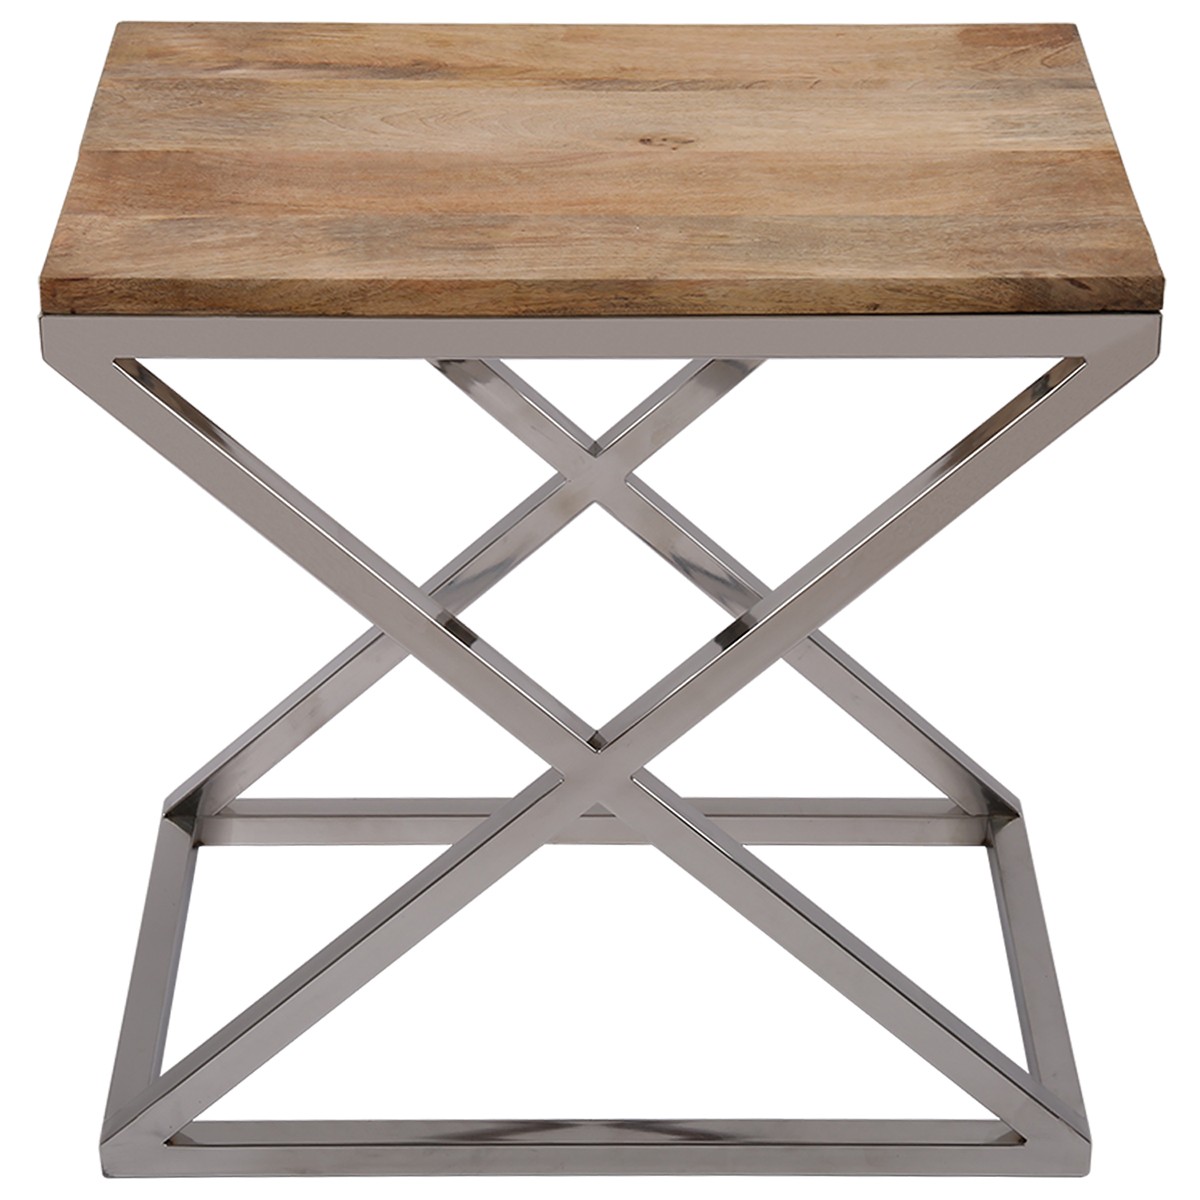 Beistelltisch rechteckig Holz-Metall, Tisch verchromt Metall Holzplatte, Höhe 60 cm